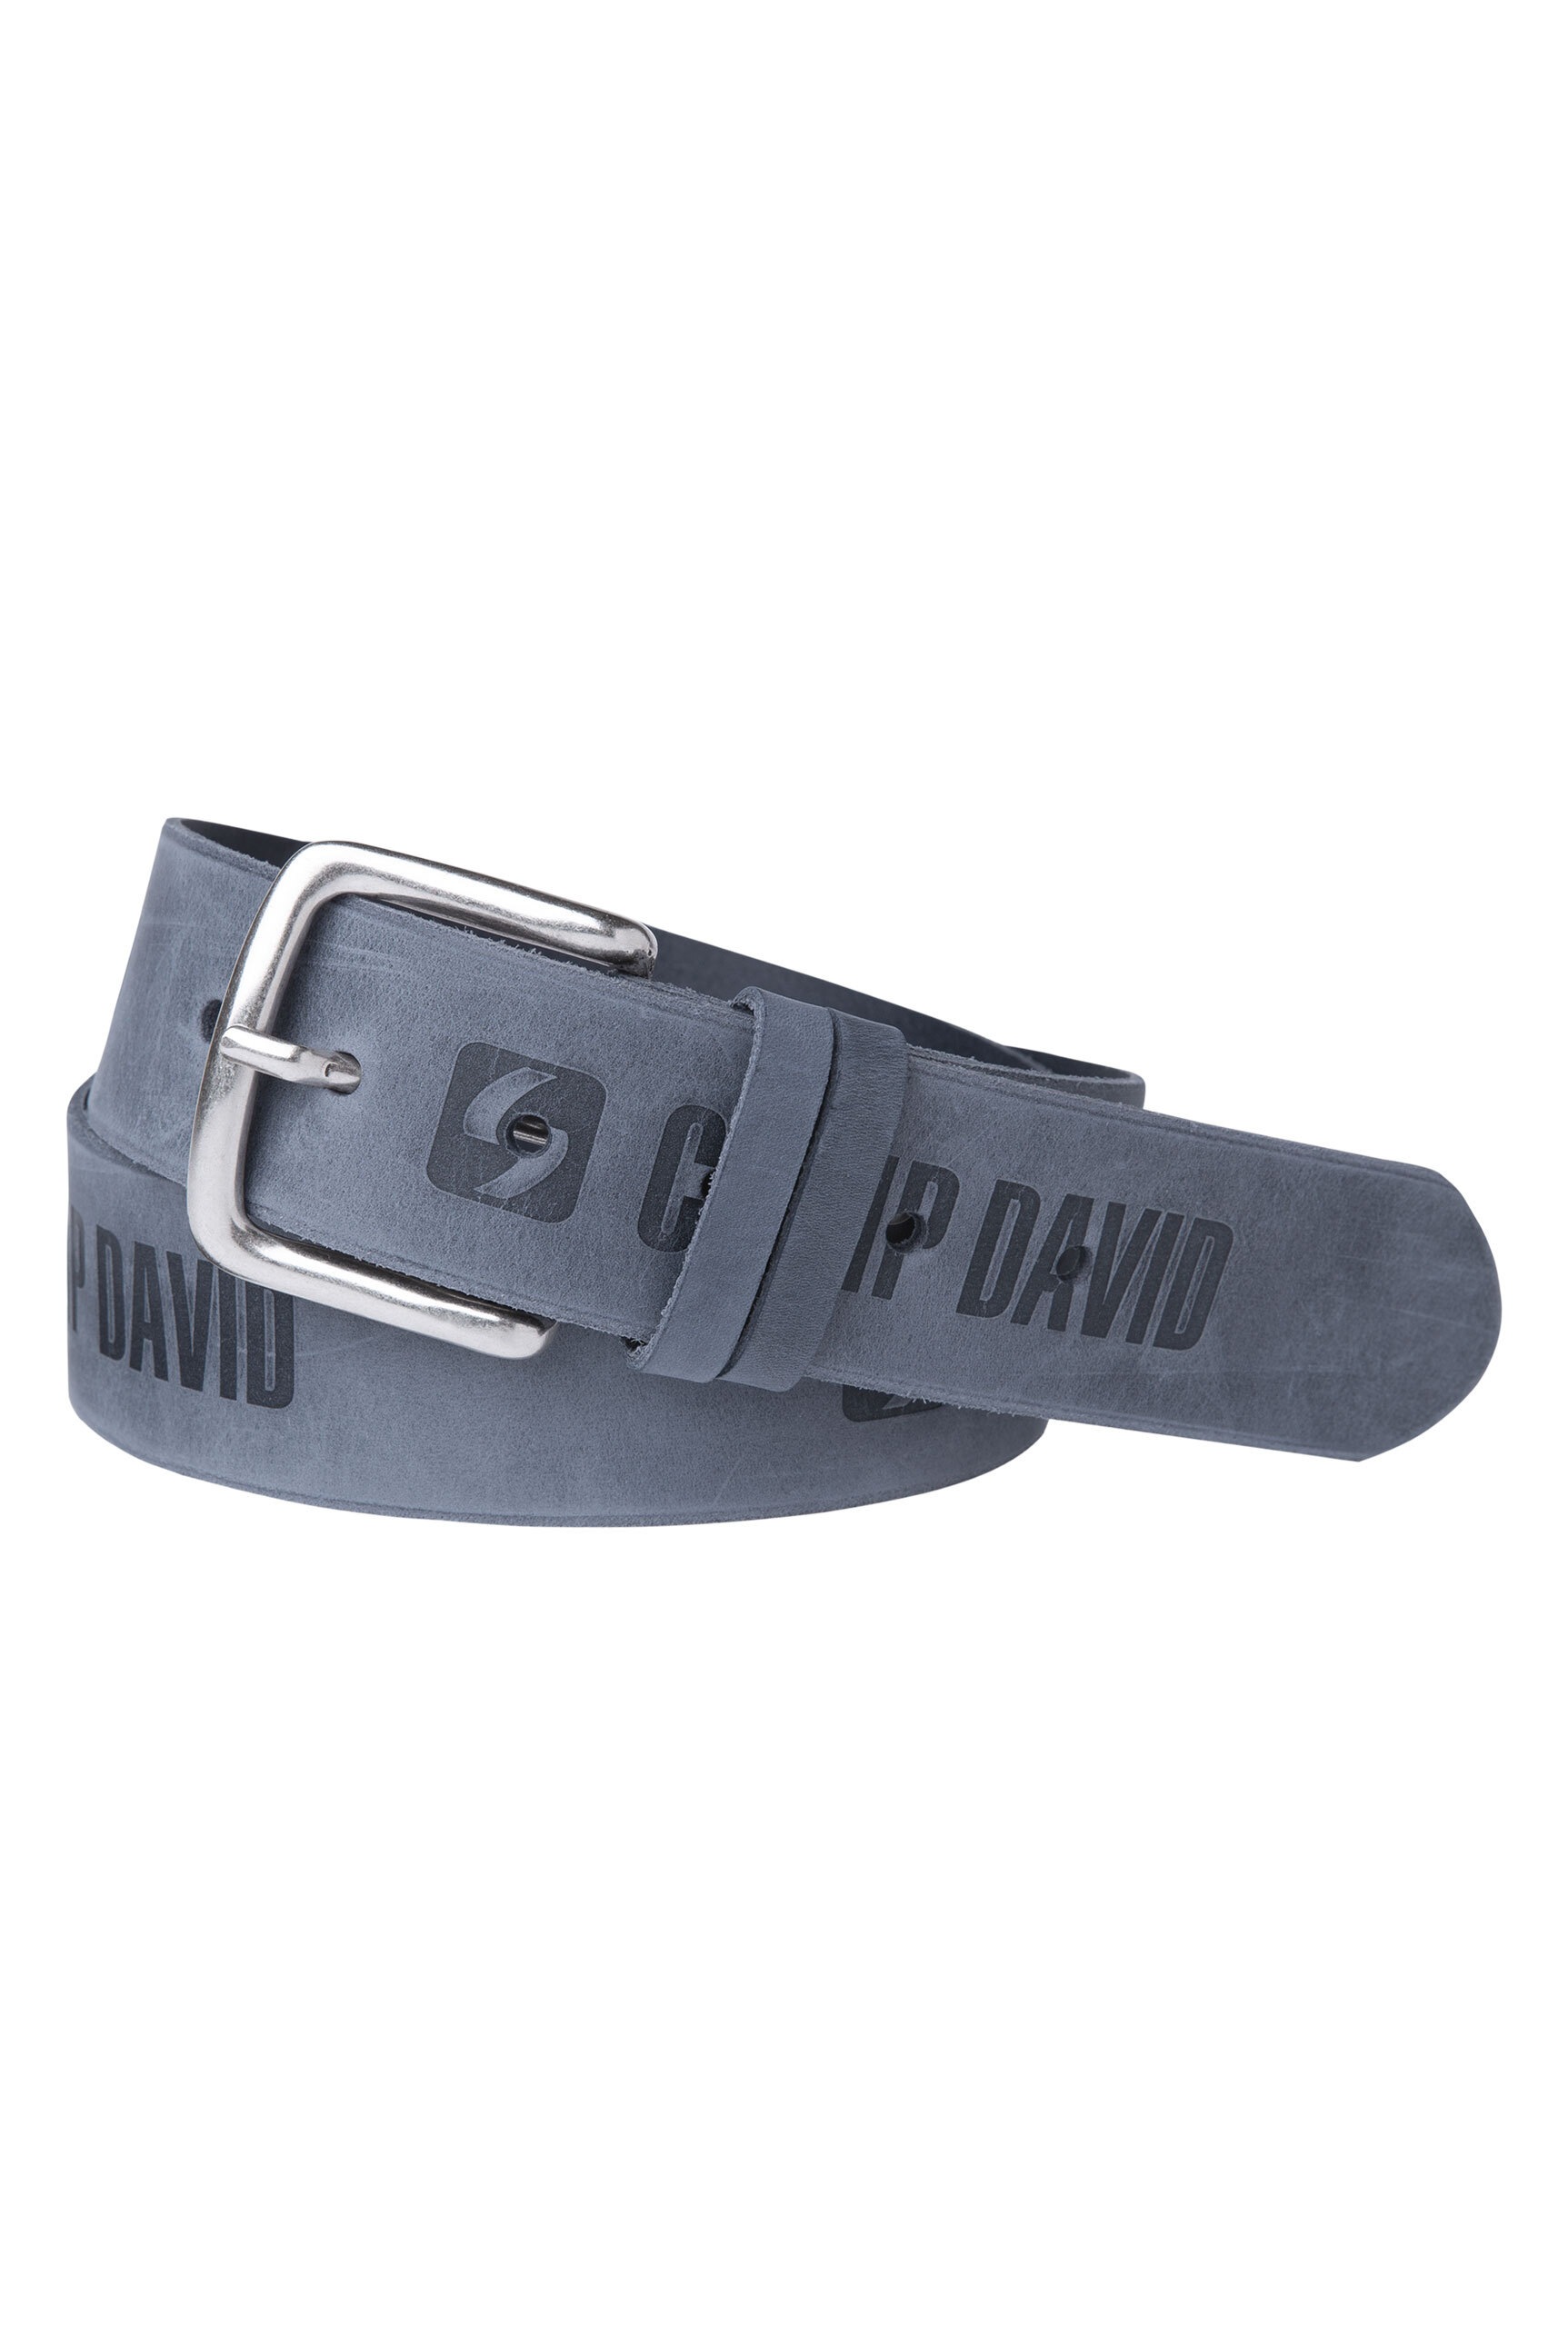 CAMP DAVID Ledergürtel, mit Used-Optik online kaufen | I\'m walking